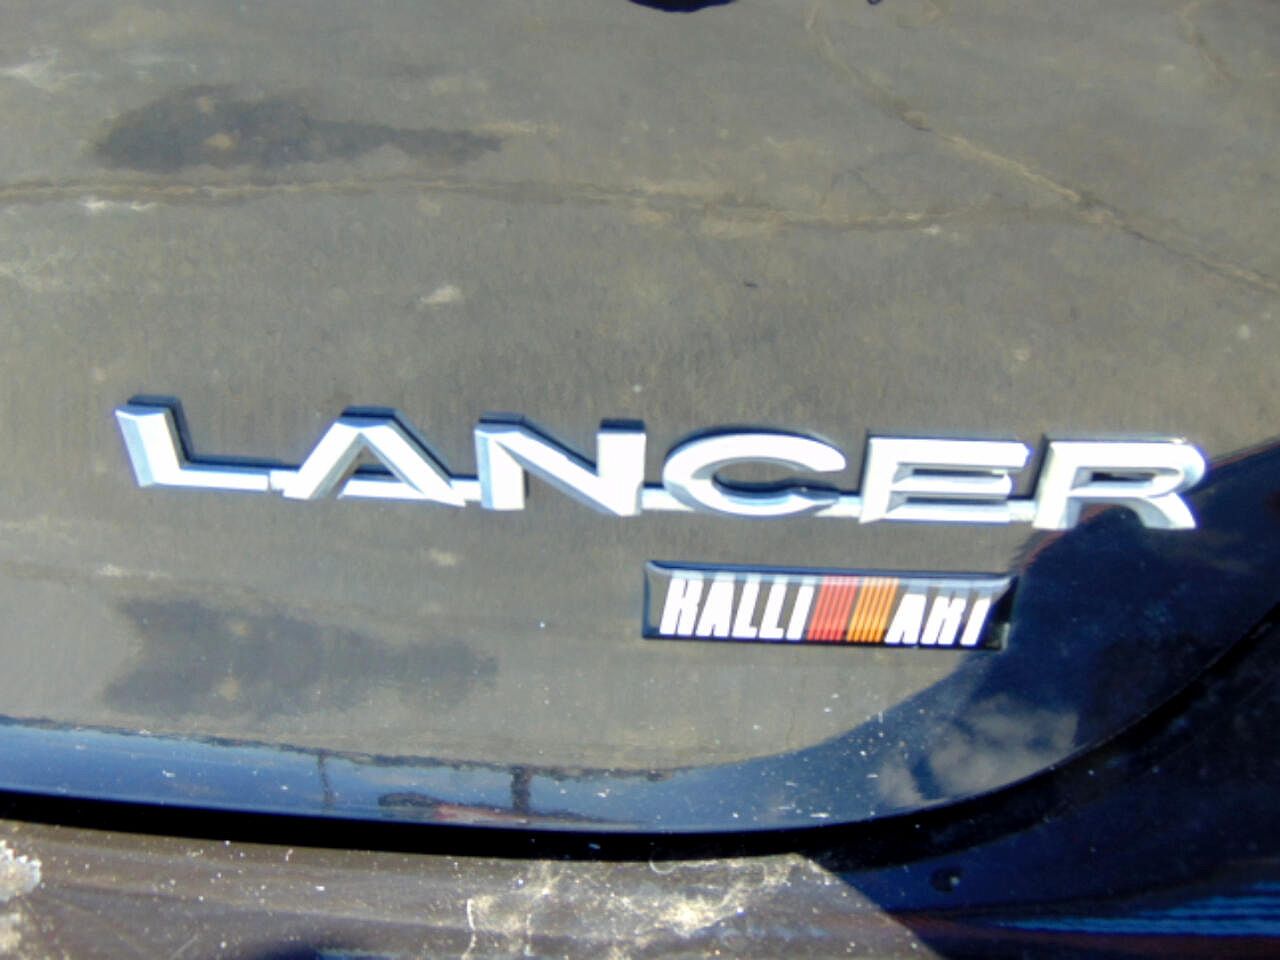 2010 Mitsubishi Lancer Ralliart image 41